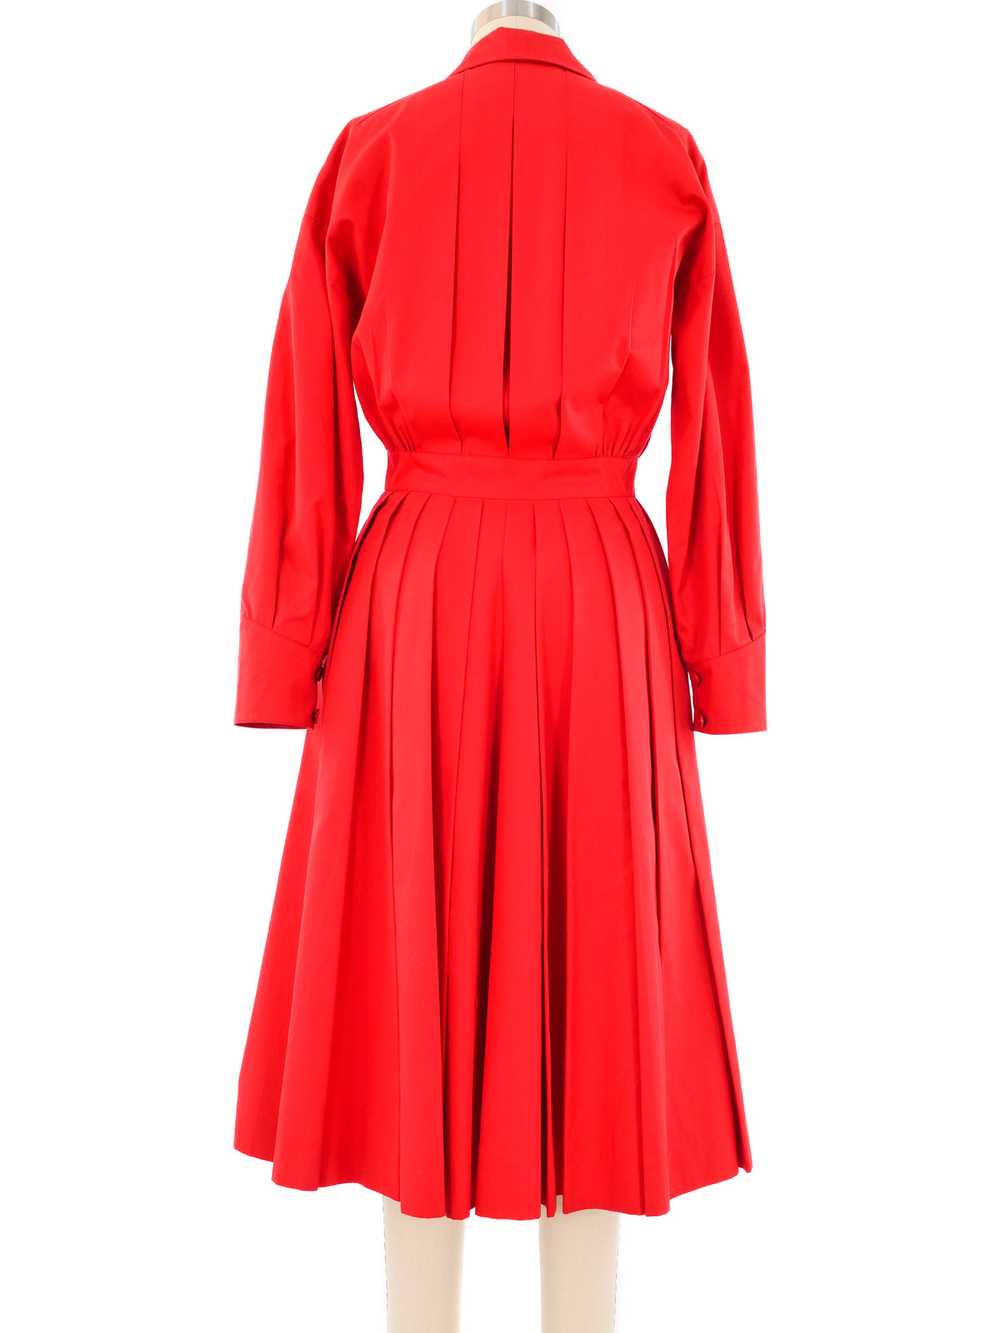 Karl Lagerfeld Red Shirt Dress - image 6